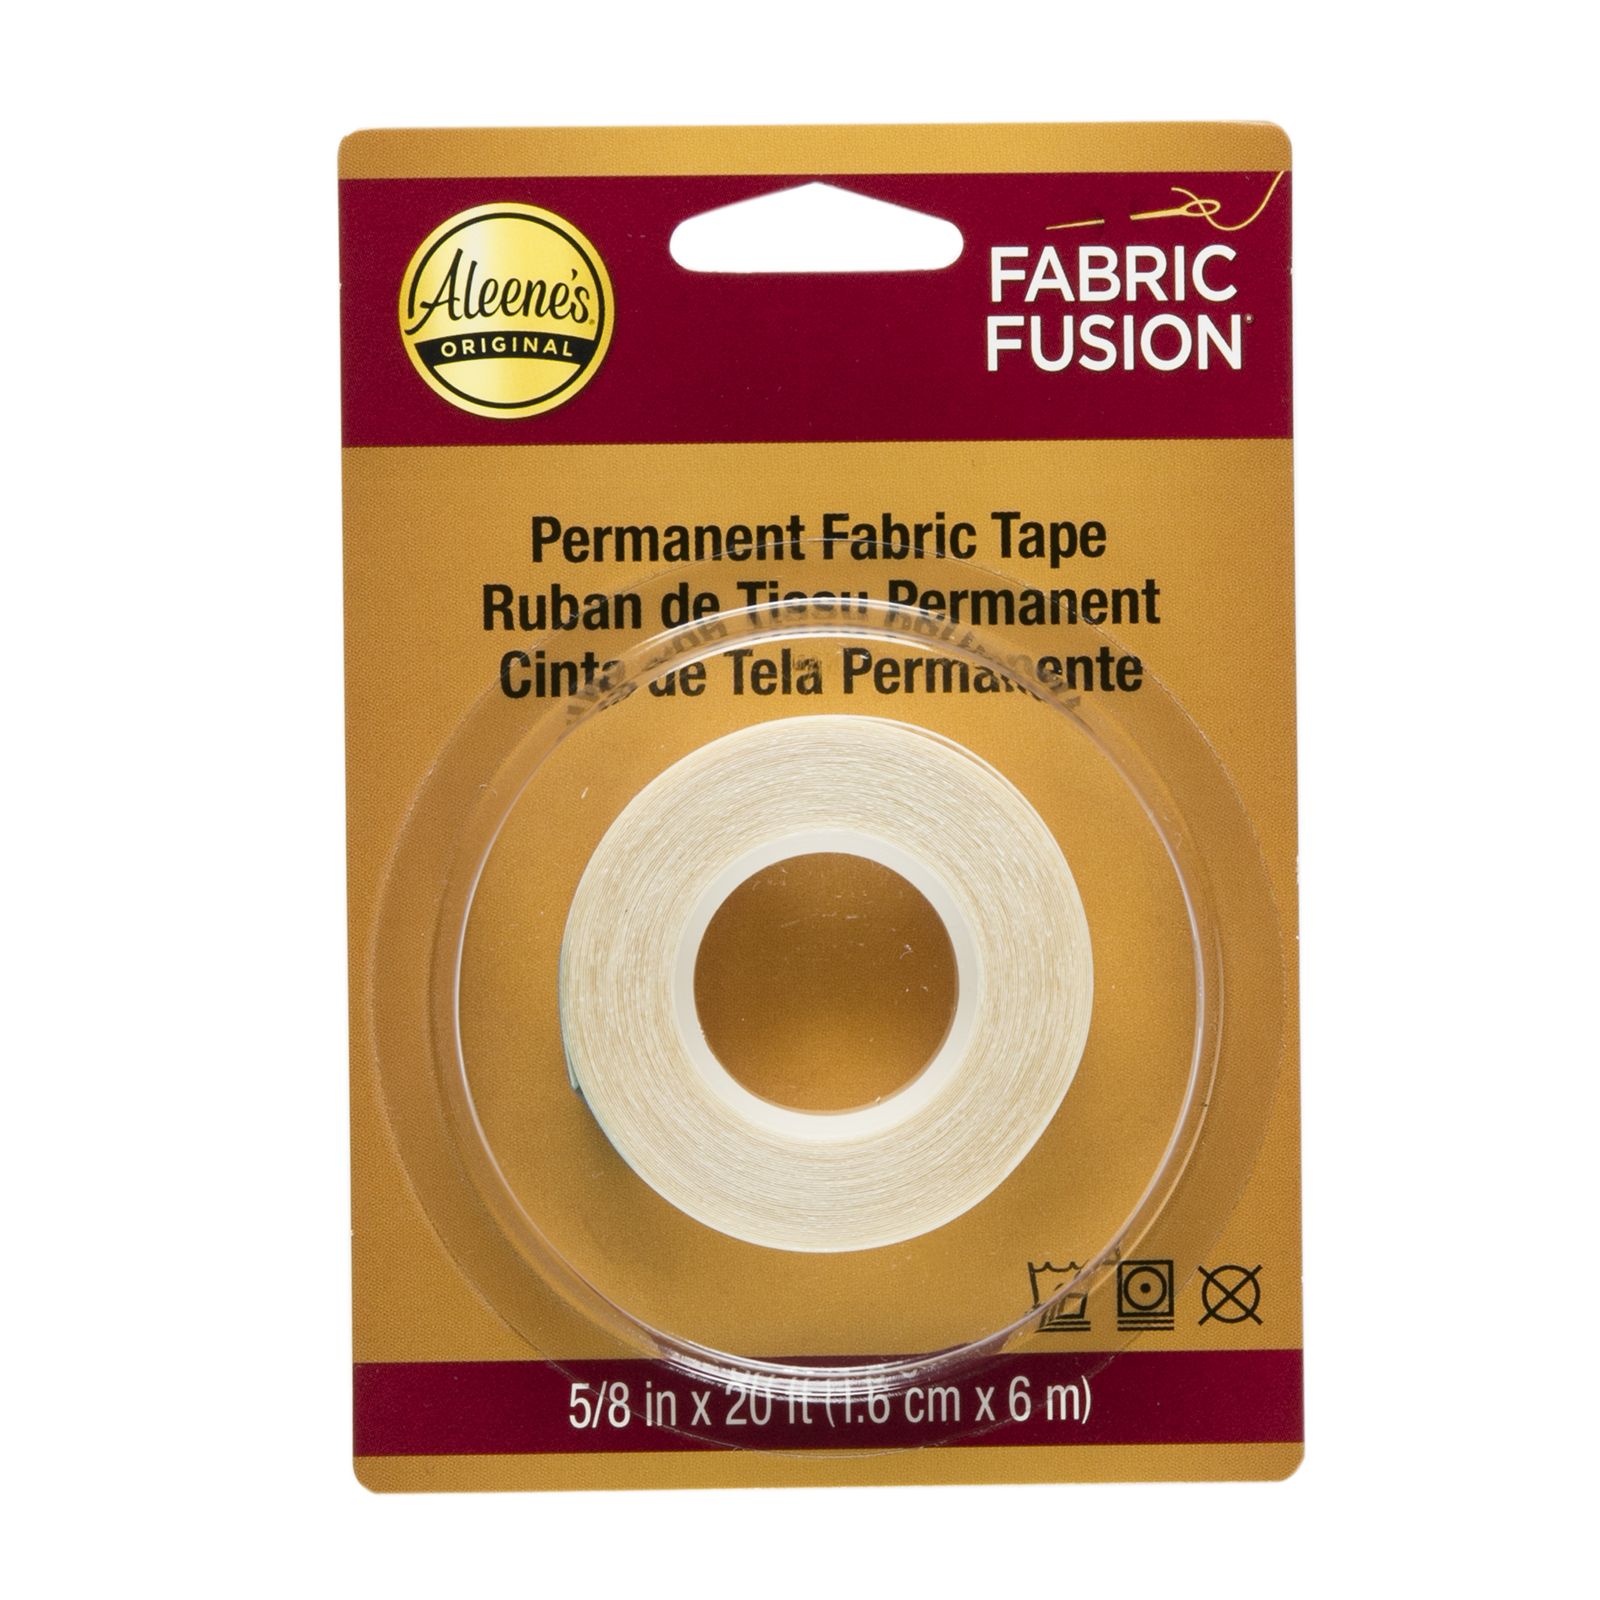 Aleene's • Fabric fusion glue permanent tape 1,6cmx6m